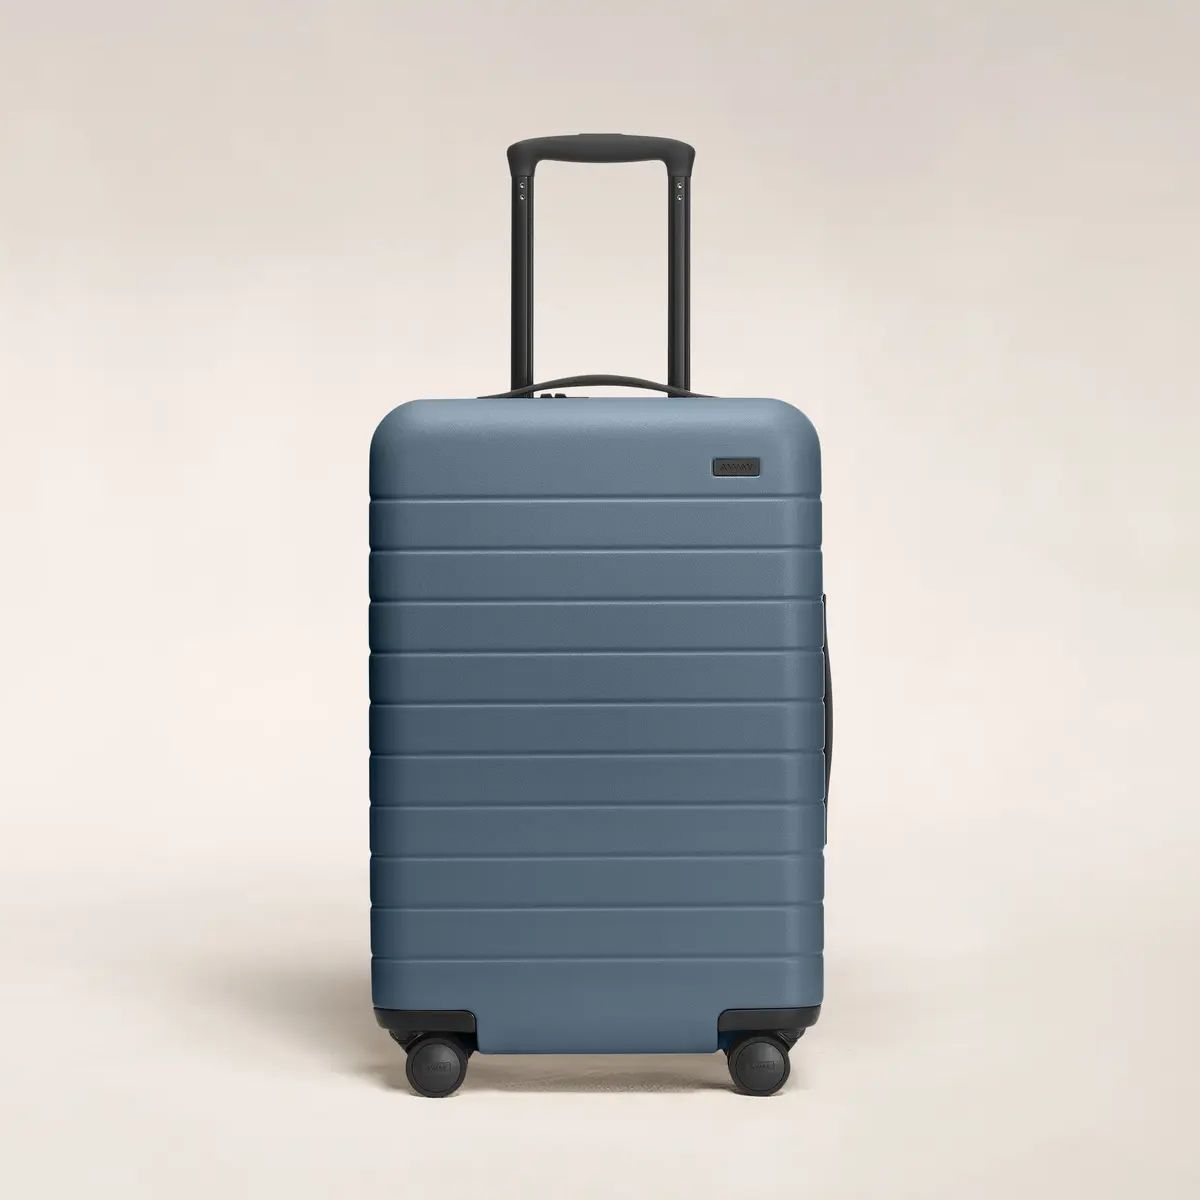 Behavior suspension retreat best travel suitcase carry on Proud bow menu